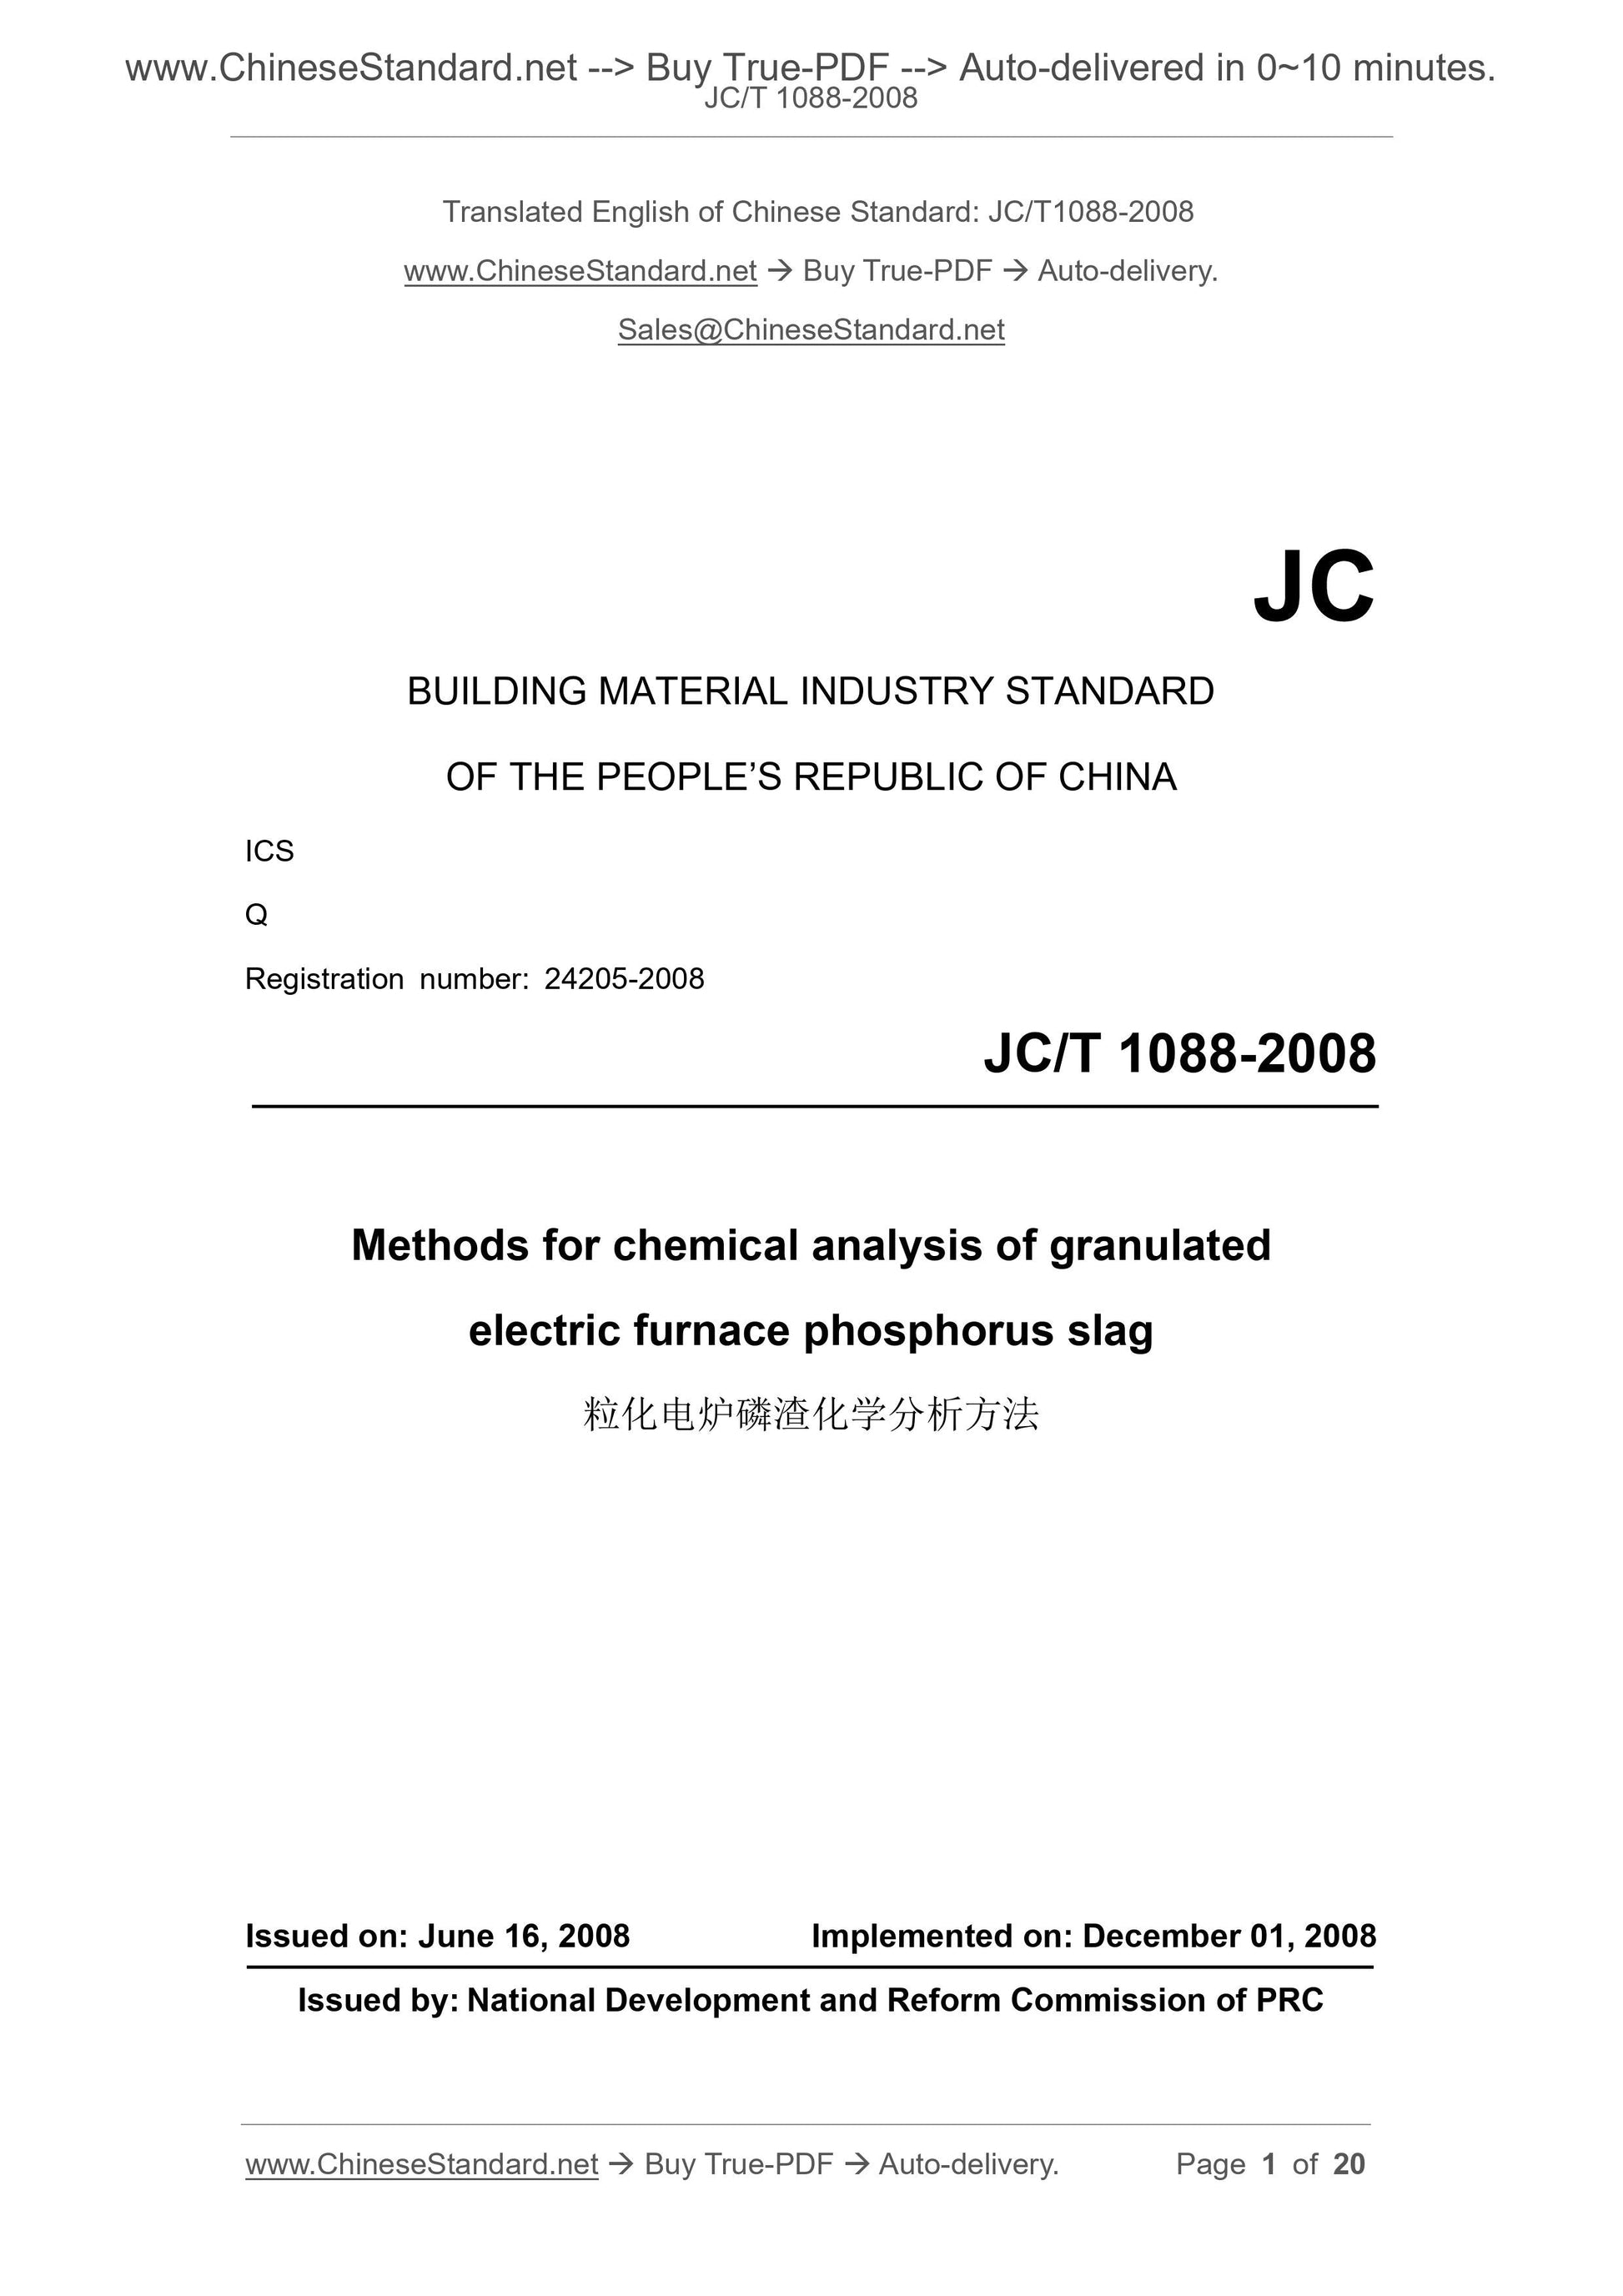 JC/T 1088-2008 Page 1